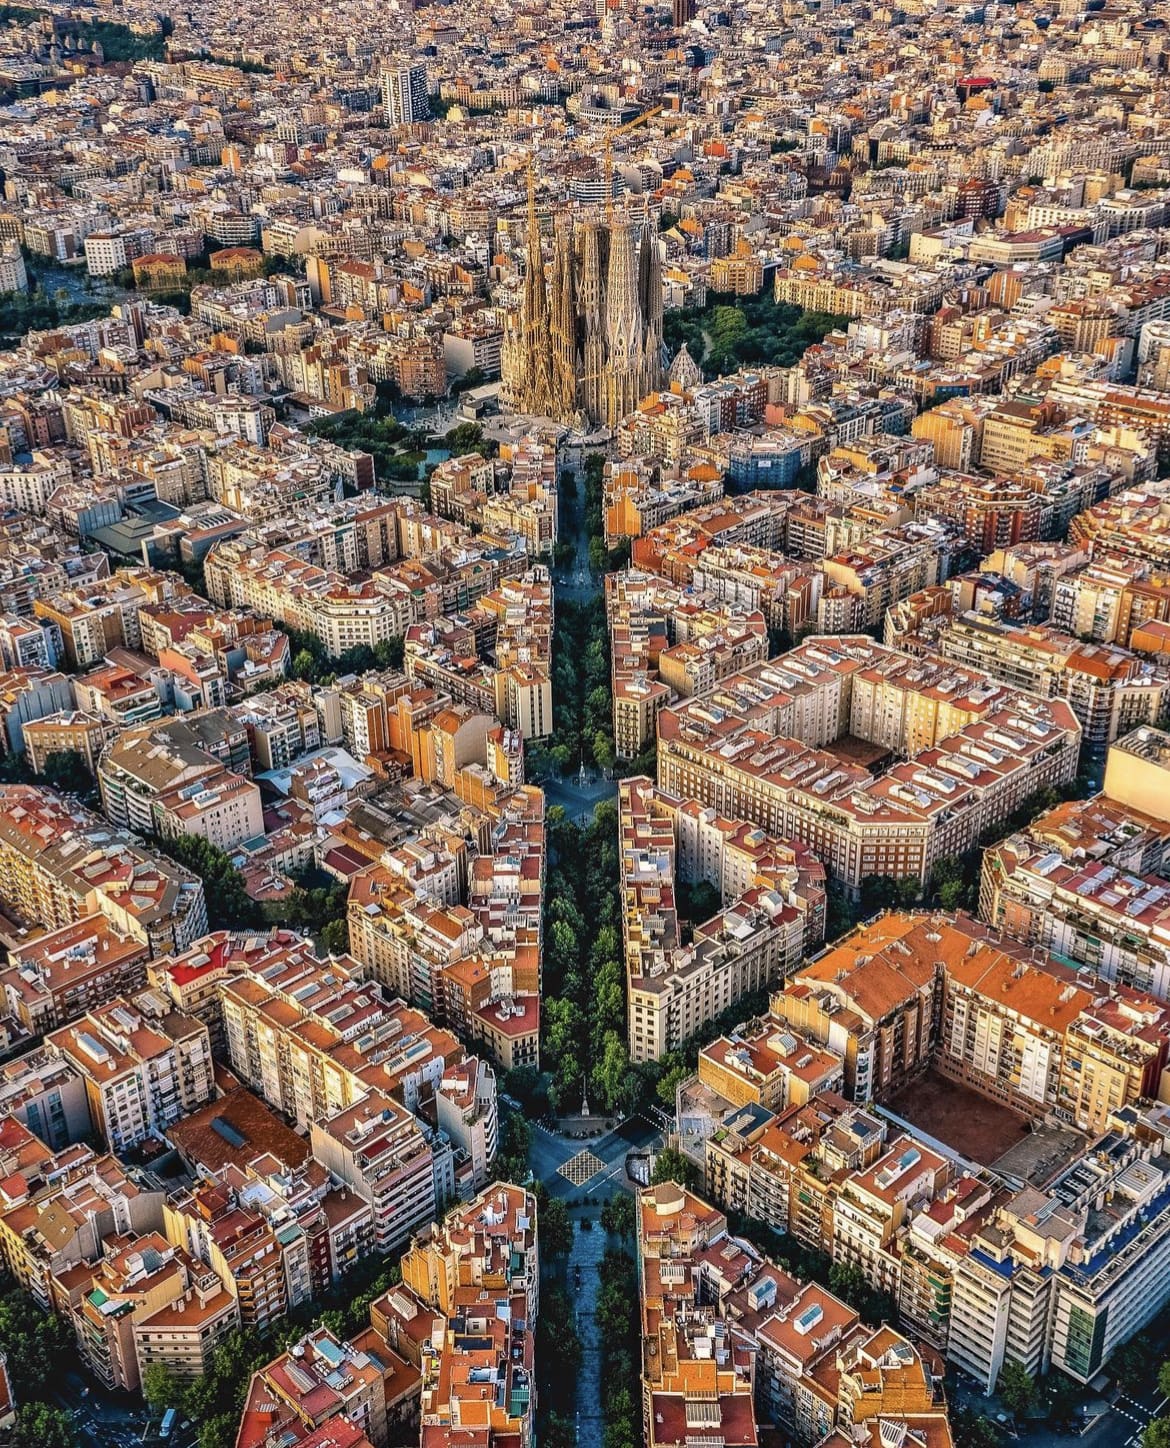 Birds eye view over Barcelona